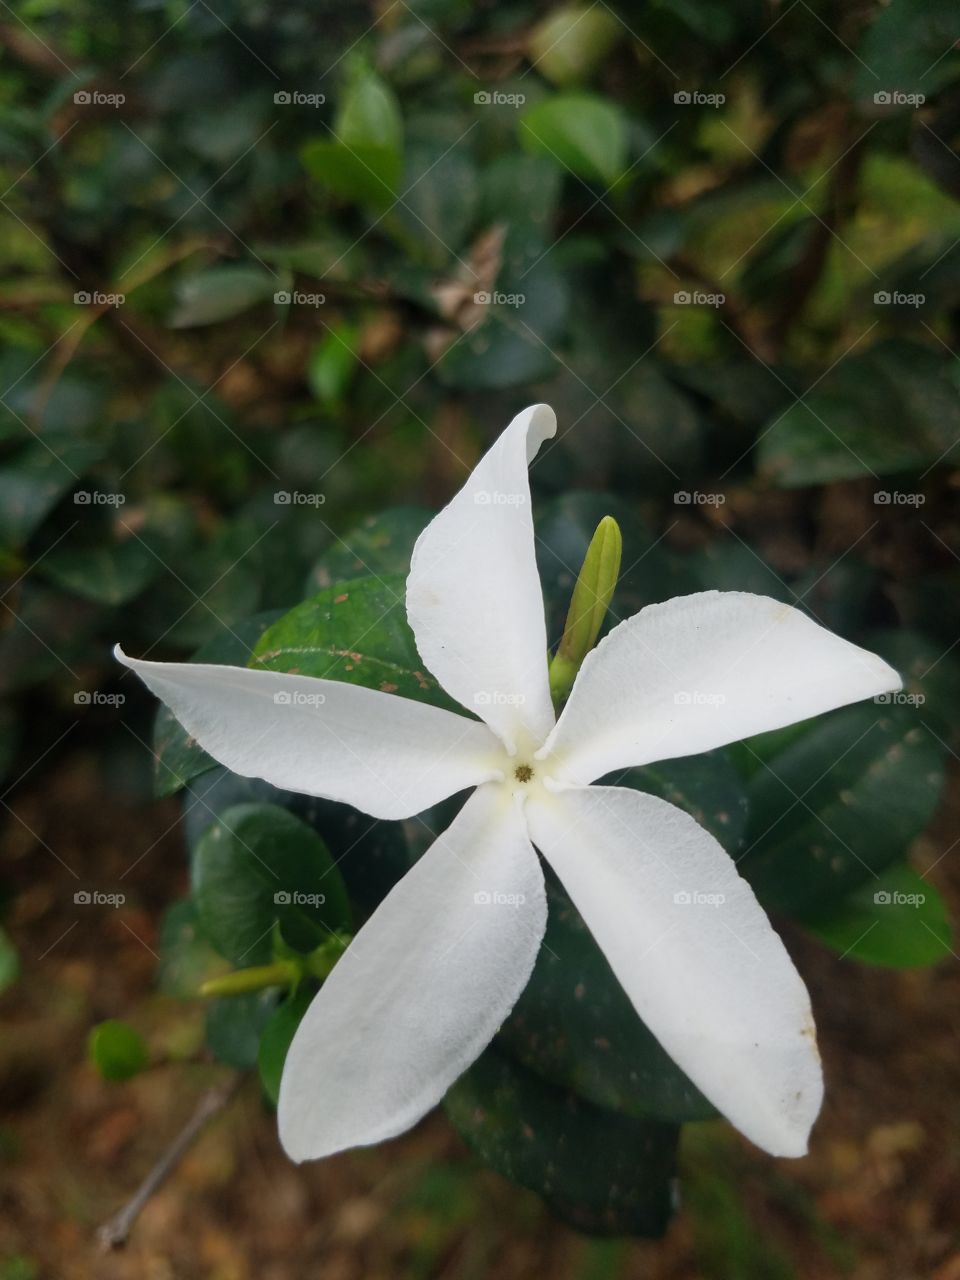 White tropical flower